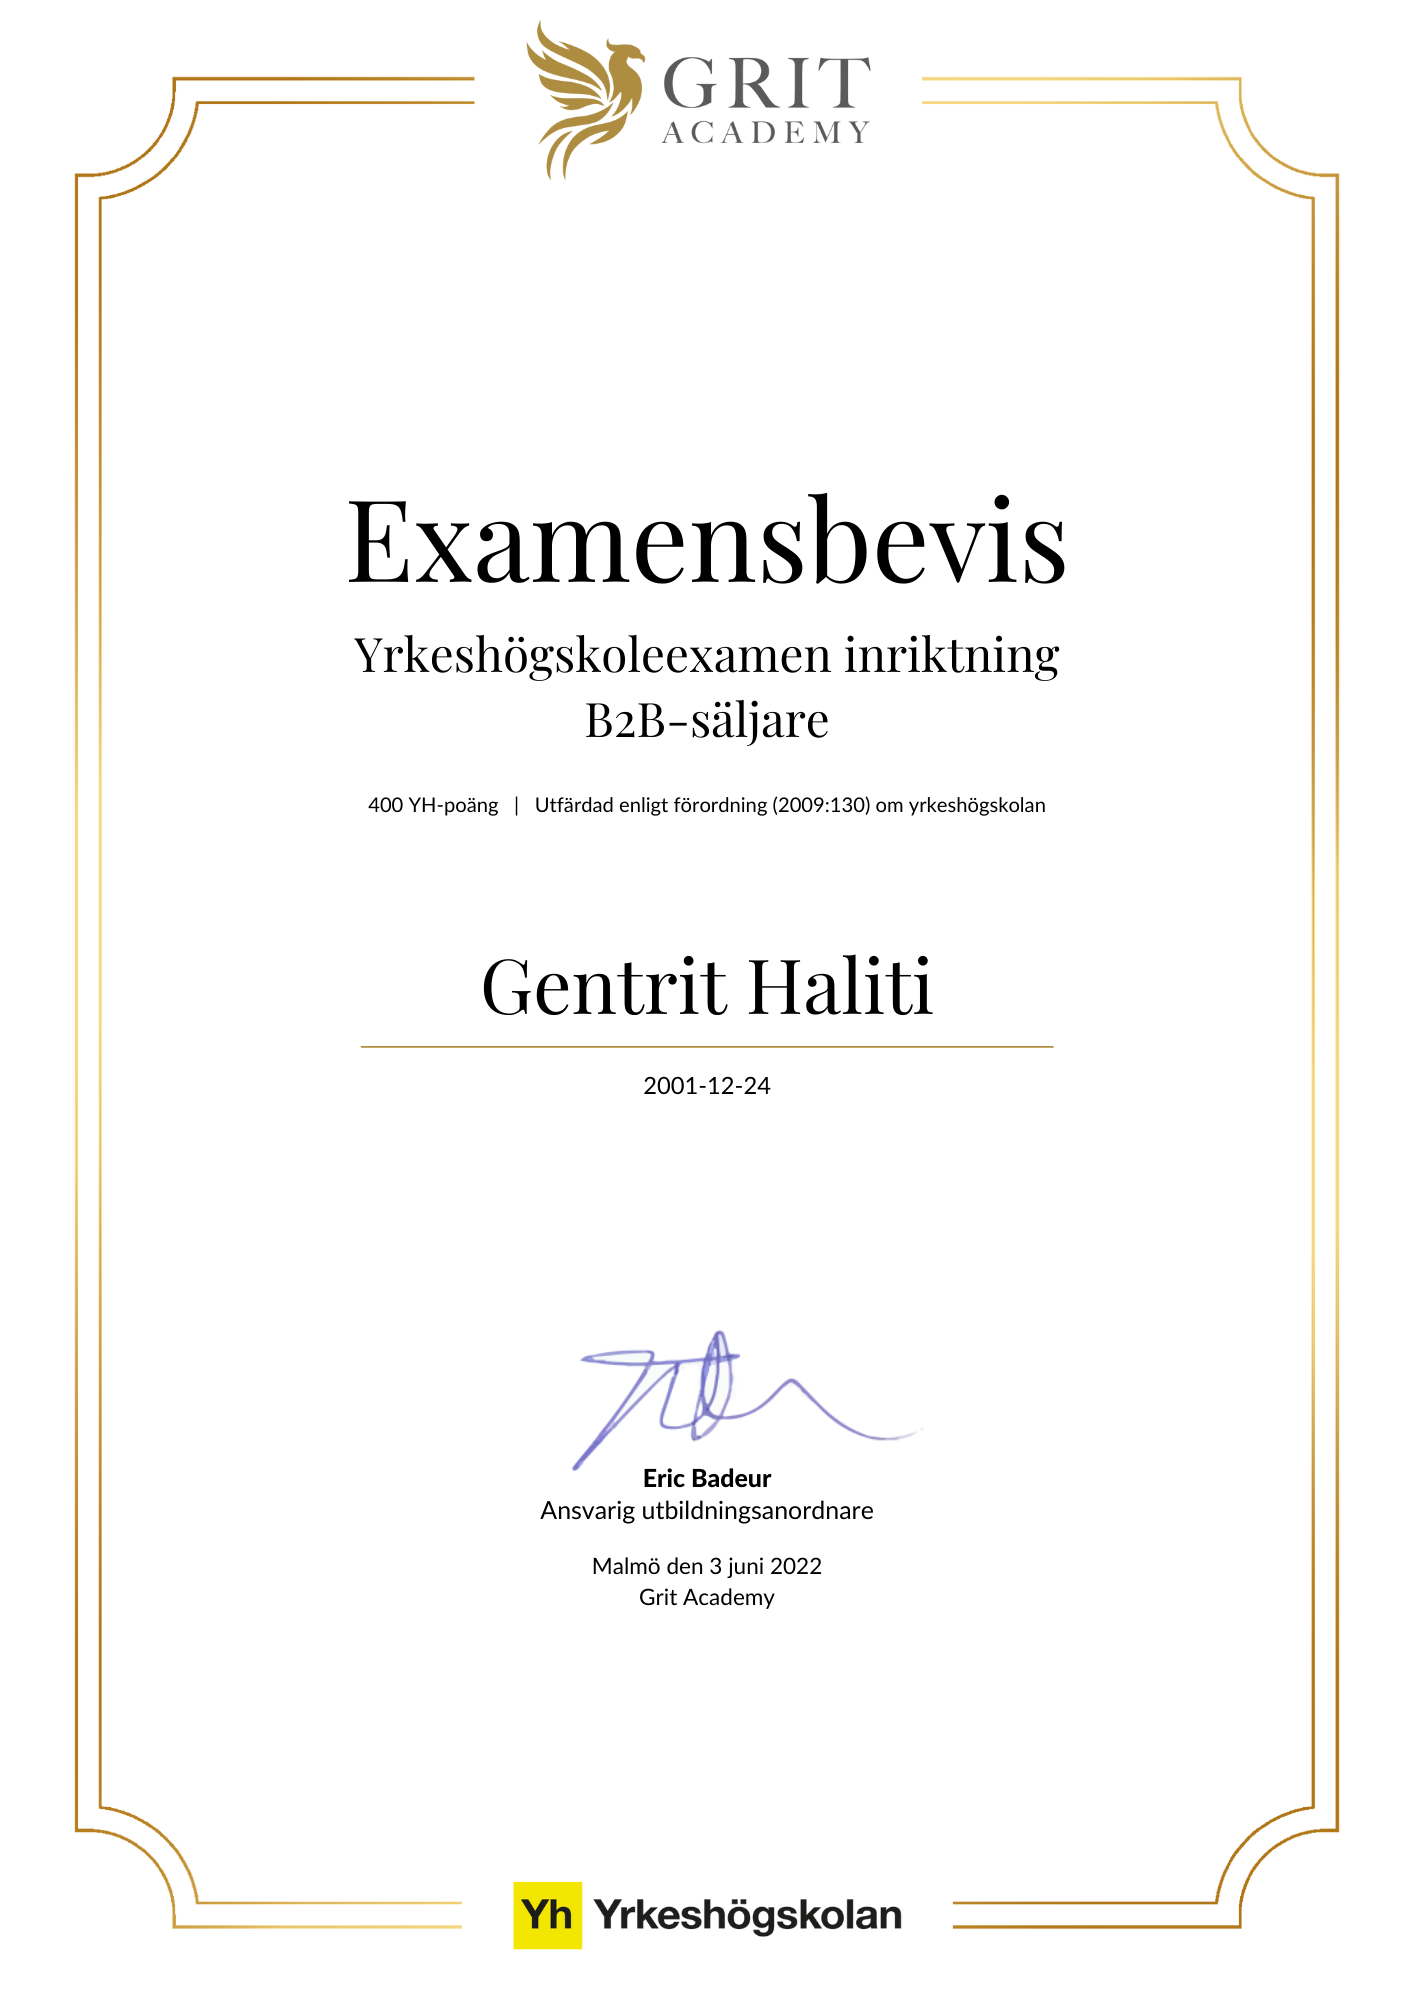 Examensbevis Gentrit Haliti - 1